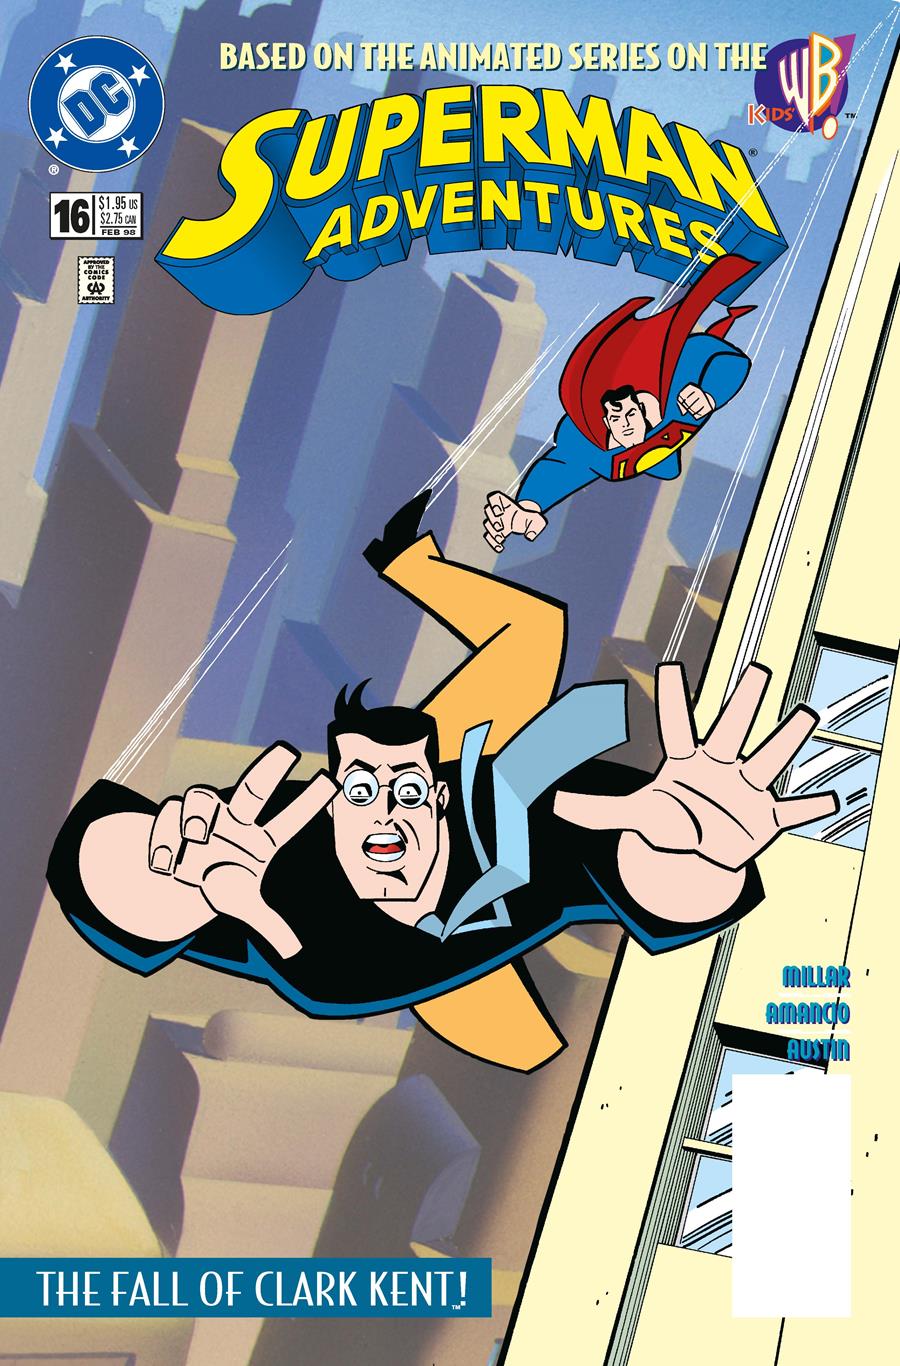 Las aventuras de Superman núm. 16 | N0822-ECC48 | Aluir Amancio / Mark Millar | Terra de Còmic - Tu tienda de cómics online especializada en cómics, manga y merchandising